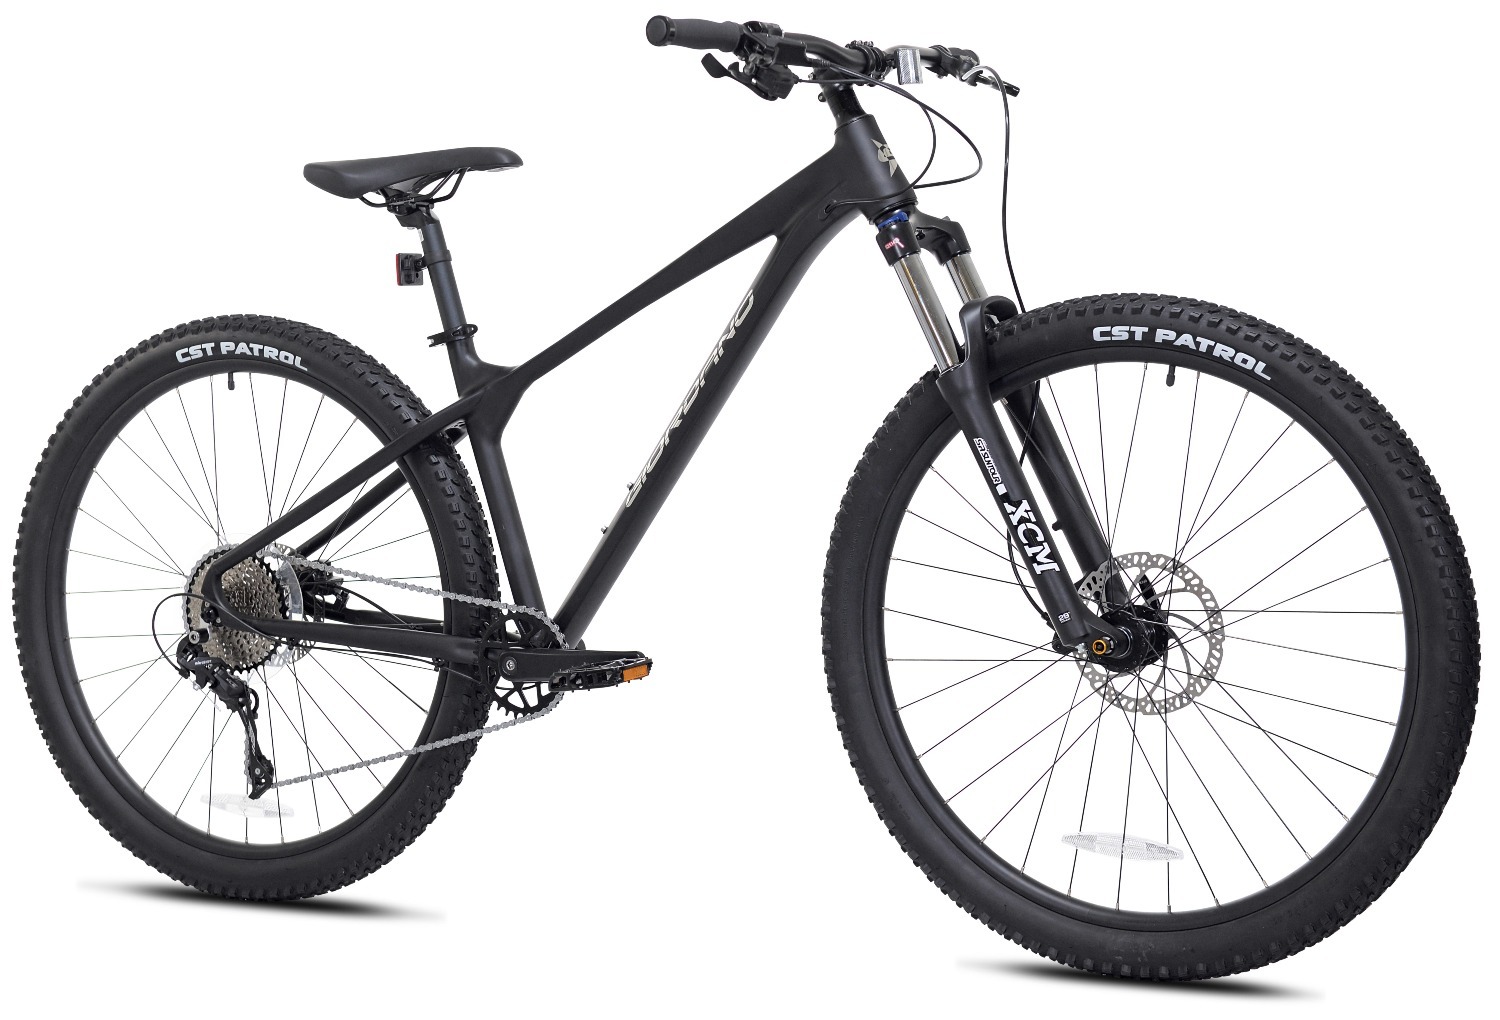 29" Giordano Intrepid Mountain Bike (Black) $530 + Free Shipping